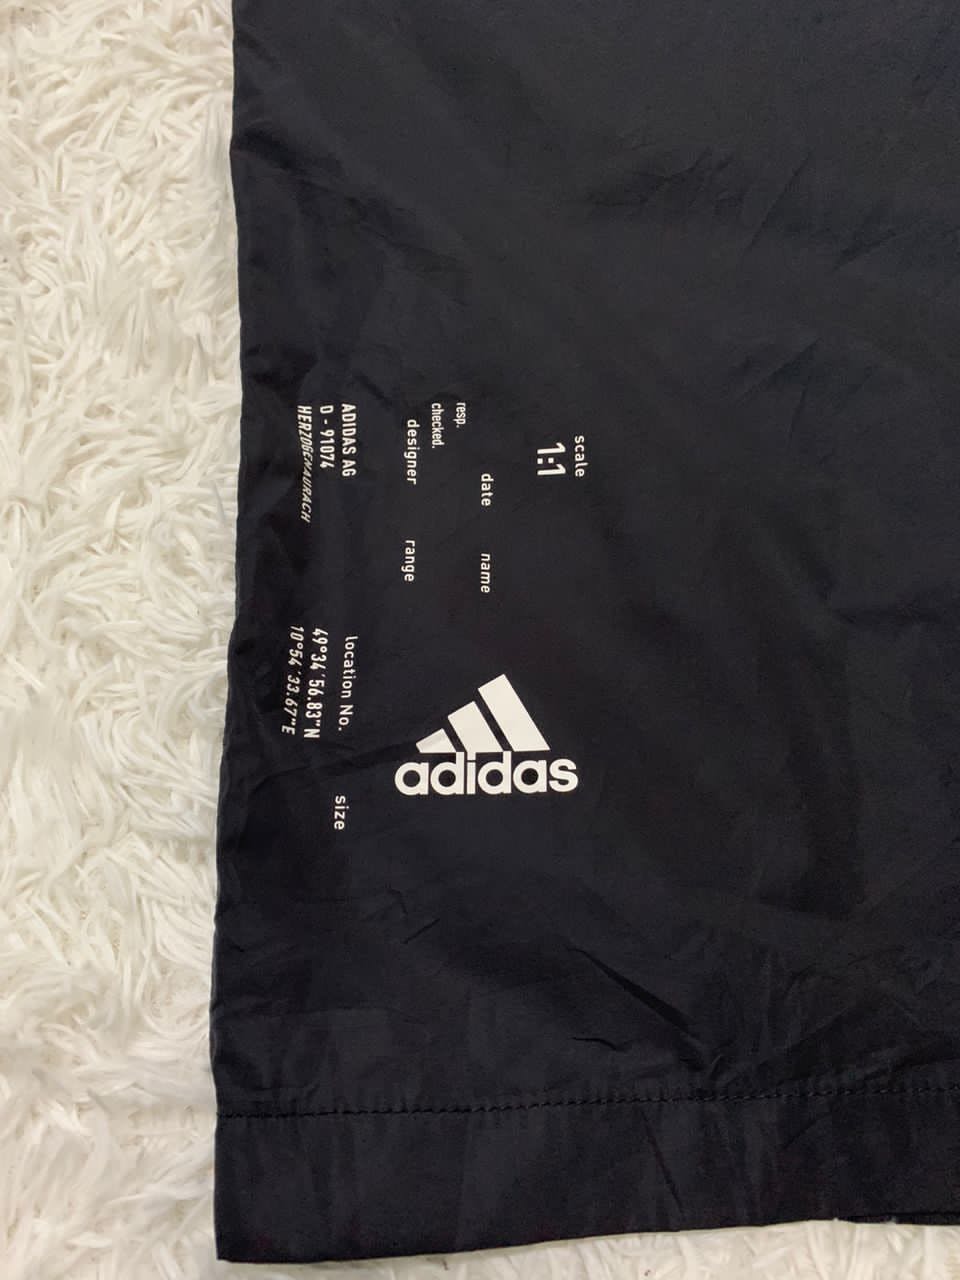 Adidas parka jacket 100% polyester - 6